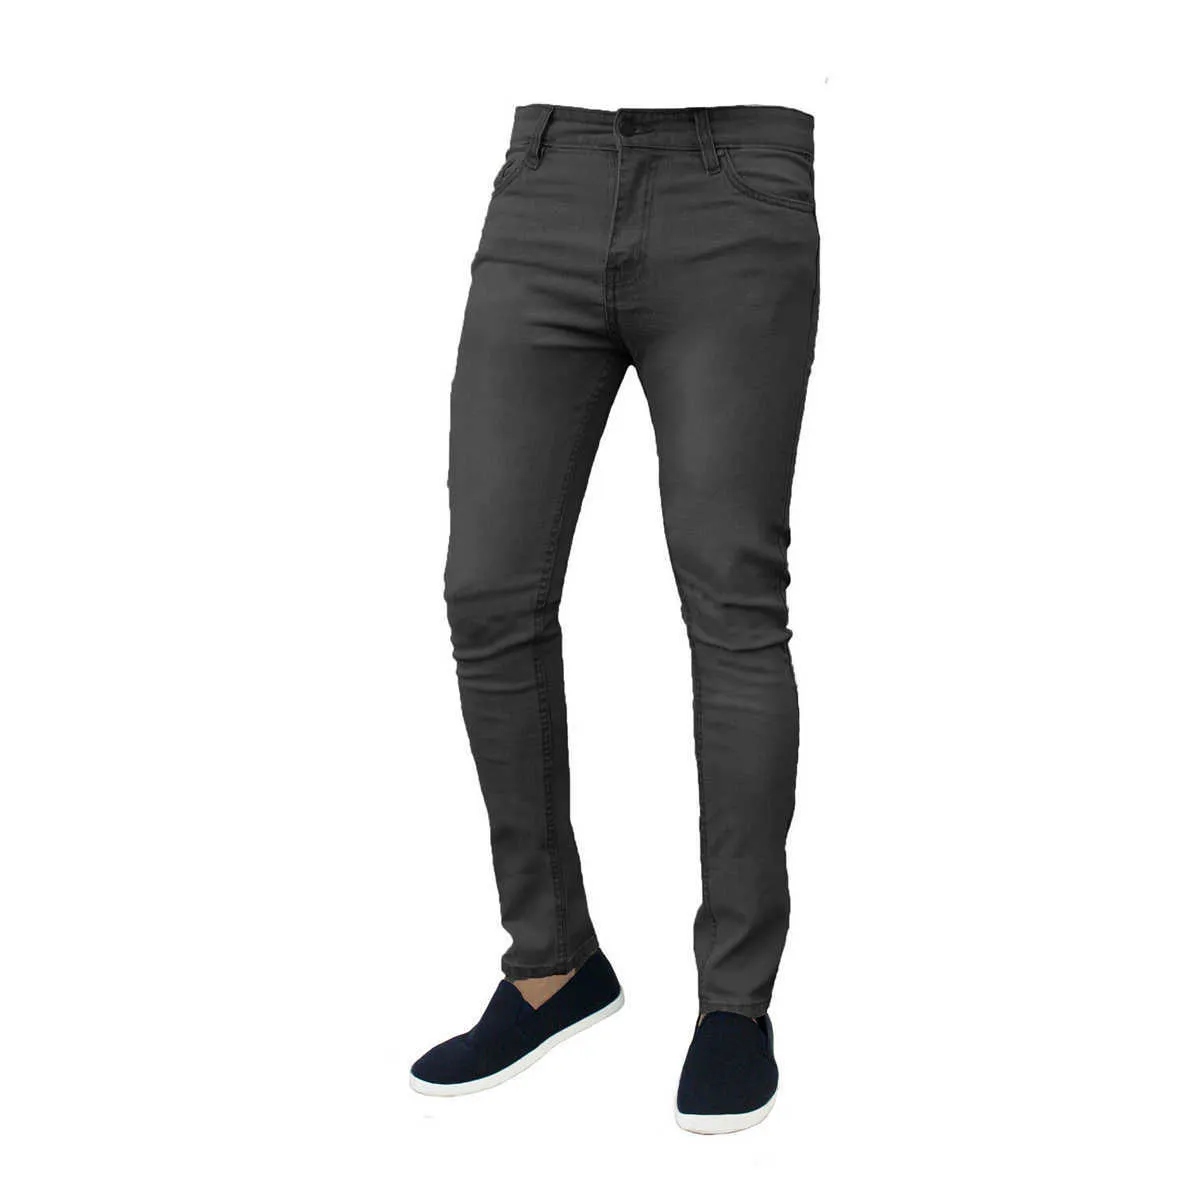 JNGSA Lounge Pants Men Casual Fashion Button Zipper Closure Striped  Gradient Casual Pencil Pants Trousers Leggings Pants Brown Clearance -  Walmart.com